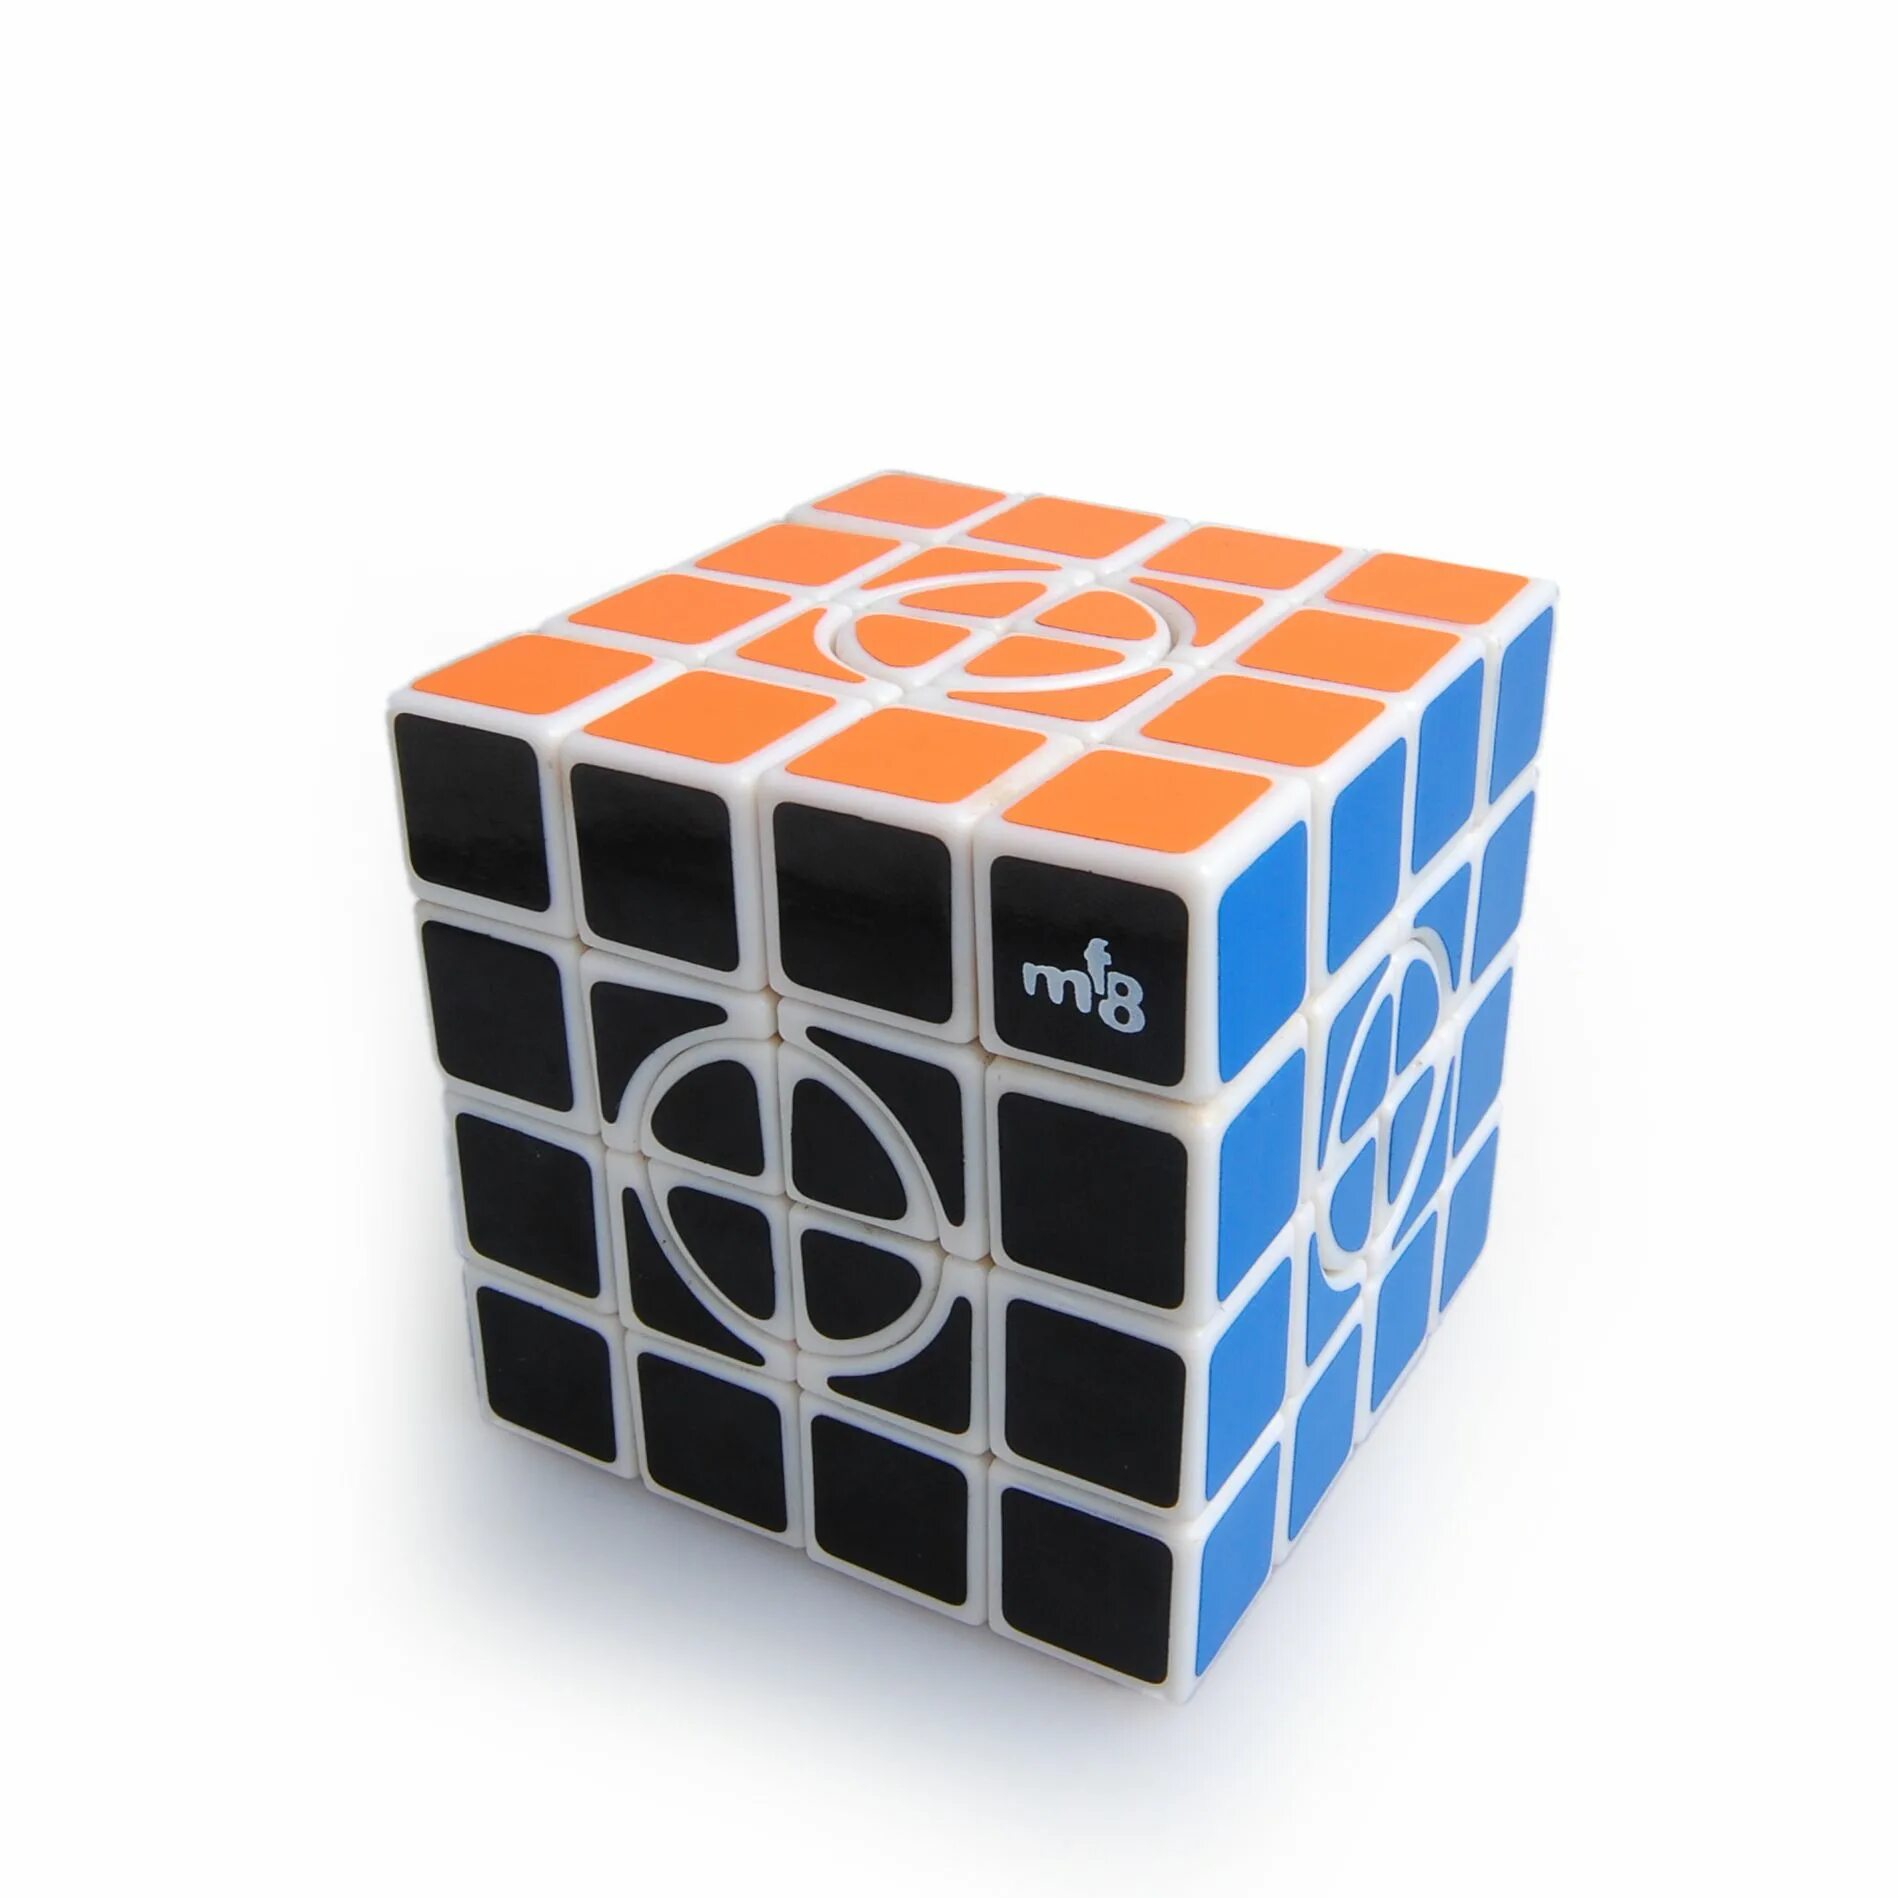 X4 cube. Cube mf8 AJ. Son-mum Cube 4x4 mf8. Ghost Cube 4x4. Dayan Cube.